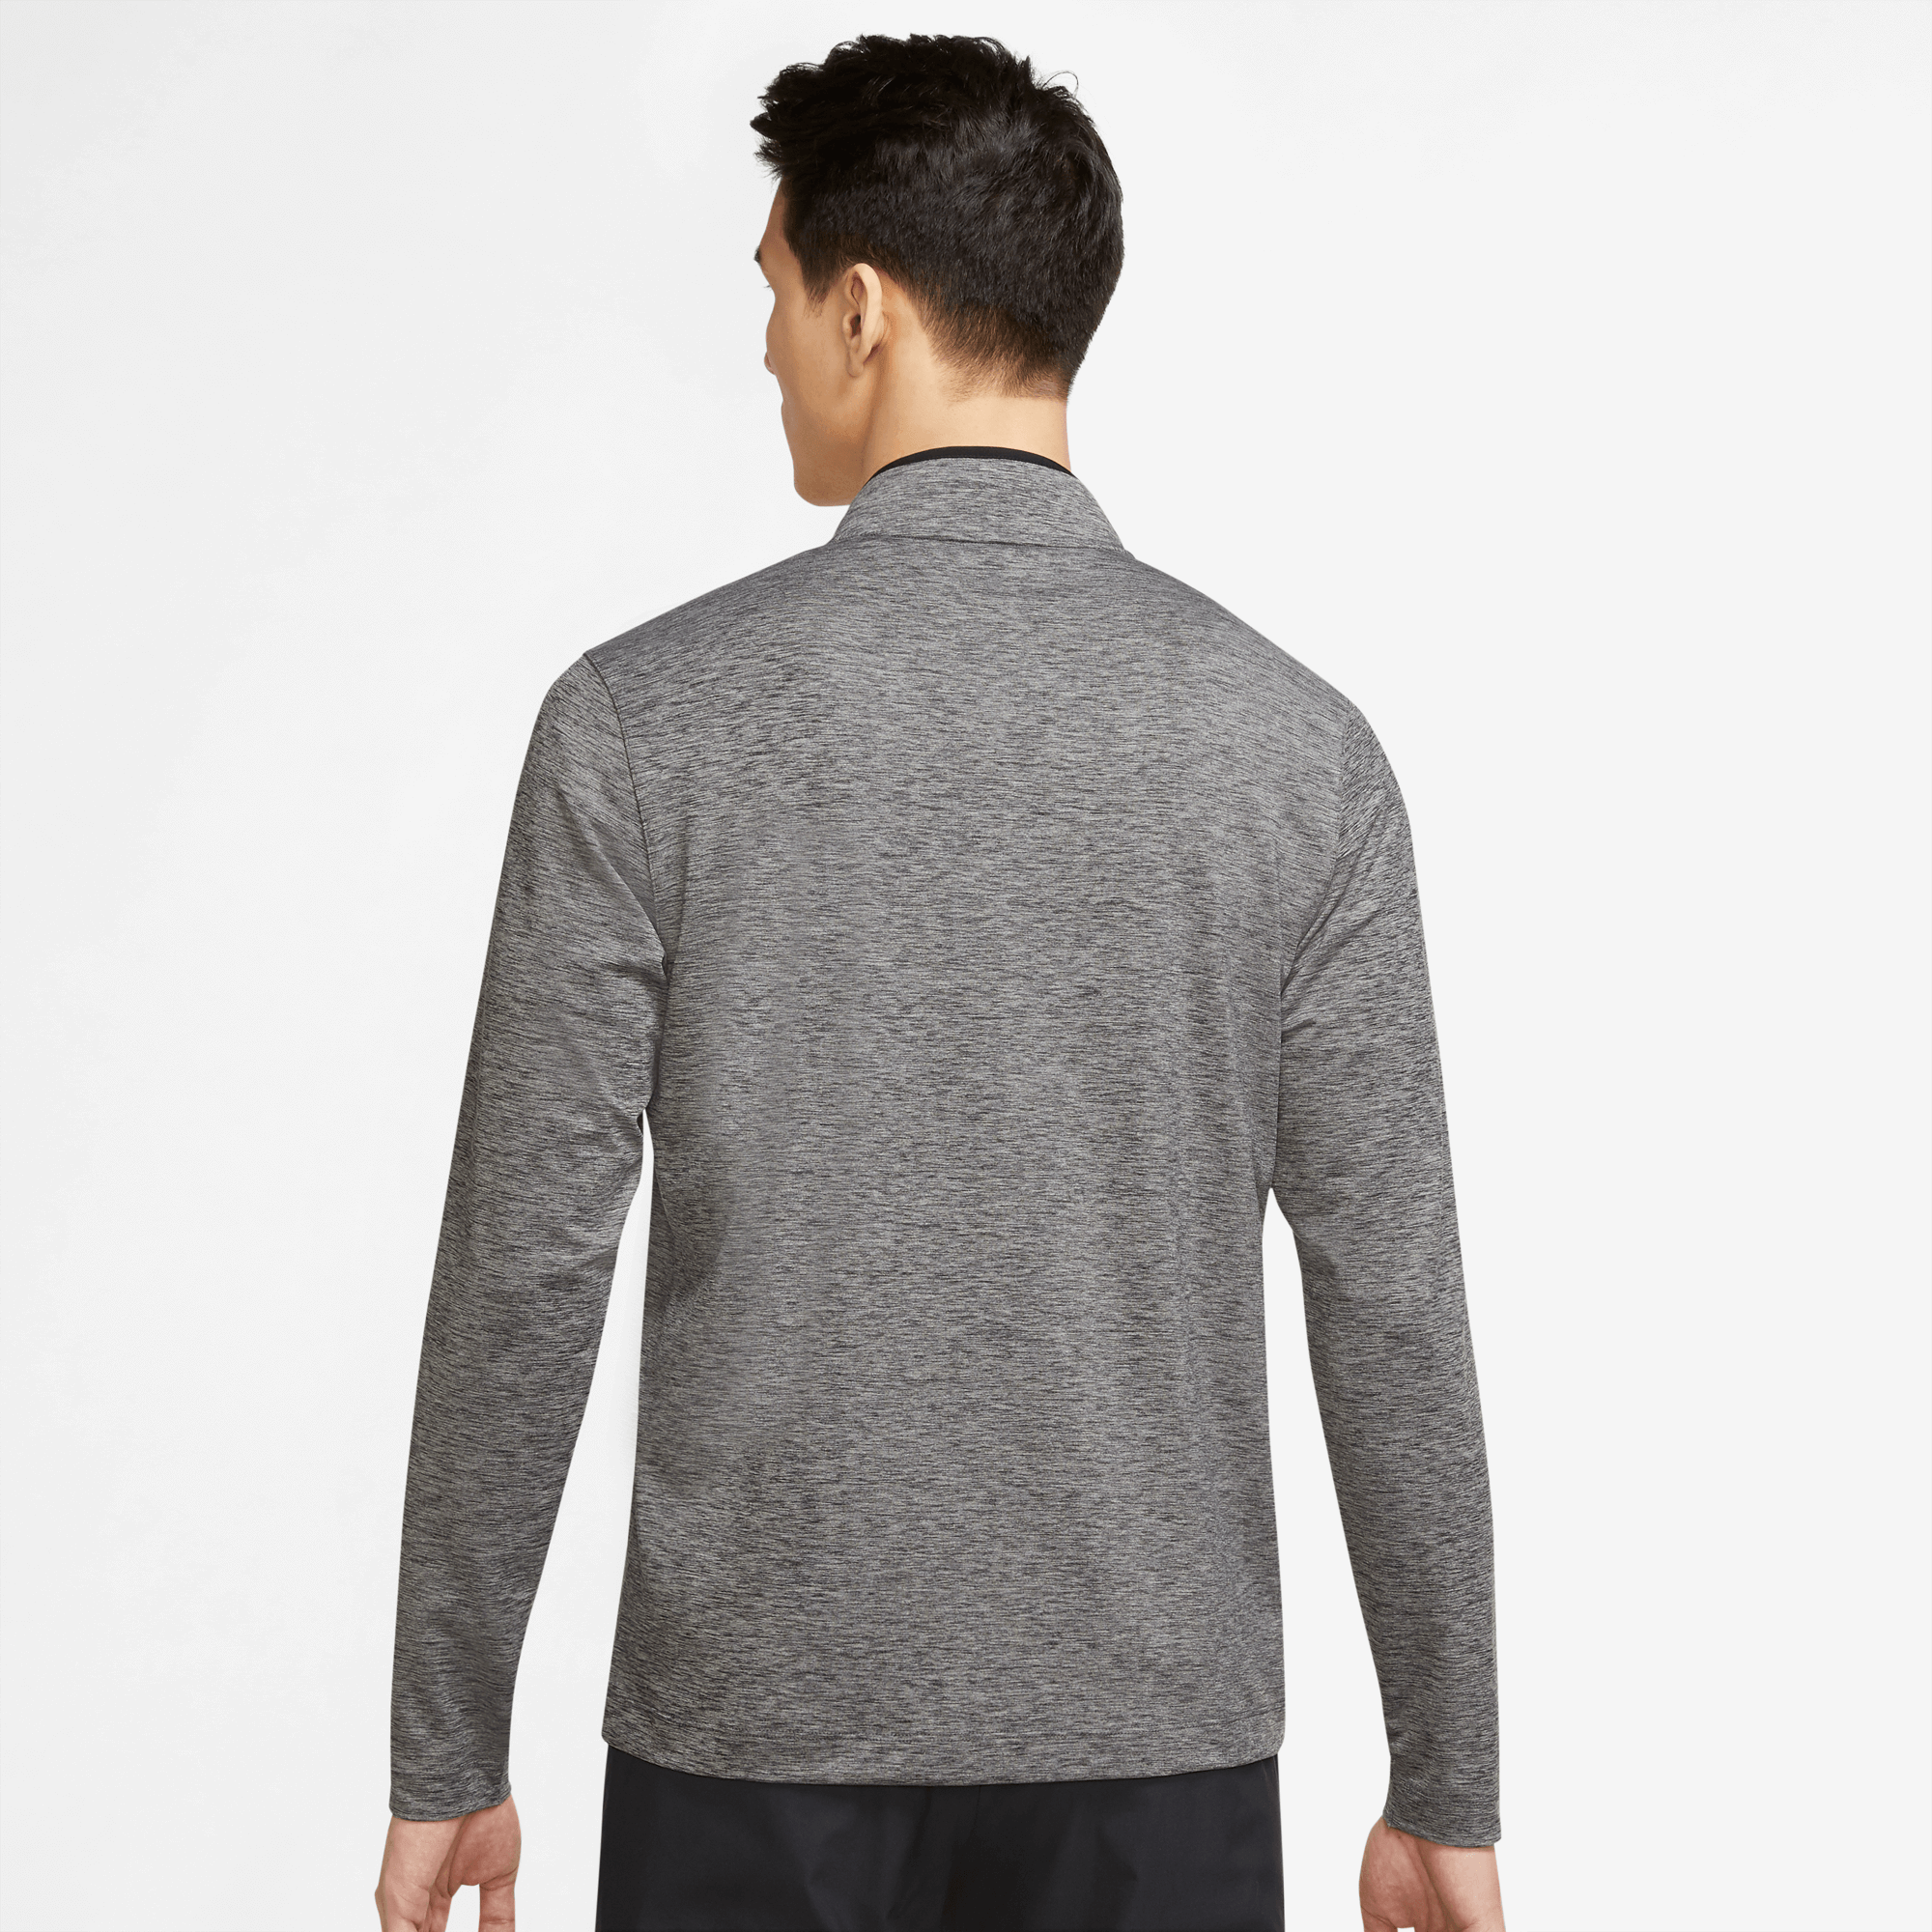 Nike Dri-Fit Victory Zip Neck Sweater Black/Pure/White | Scottsdale Golf